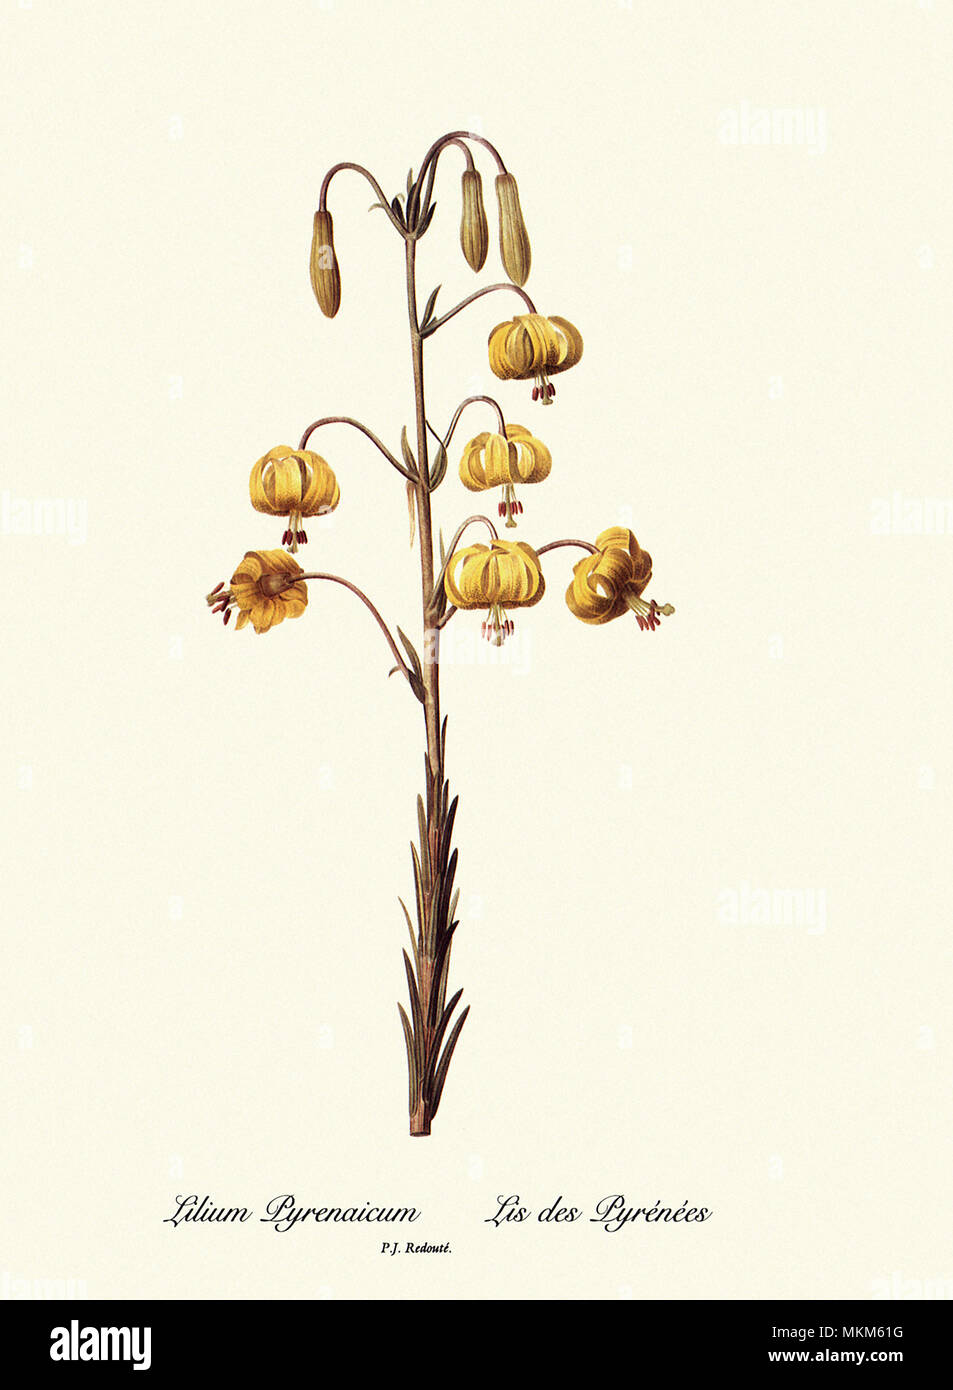 Lilium Pyrenaicum, Lis des Pyrénées Stockfoto